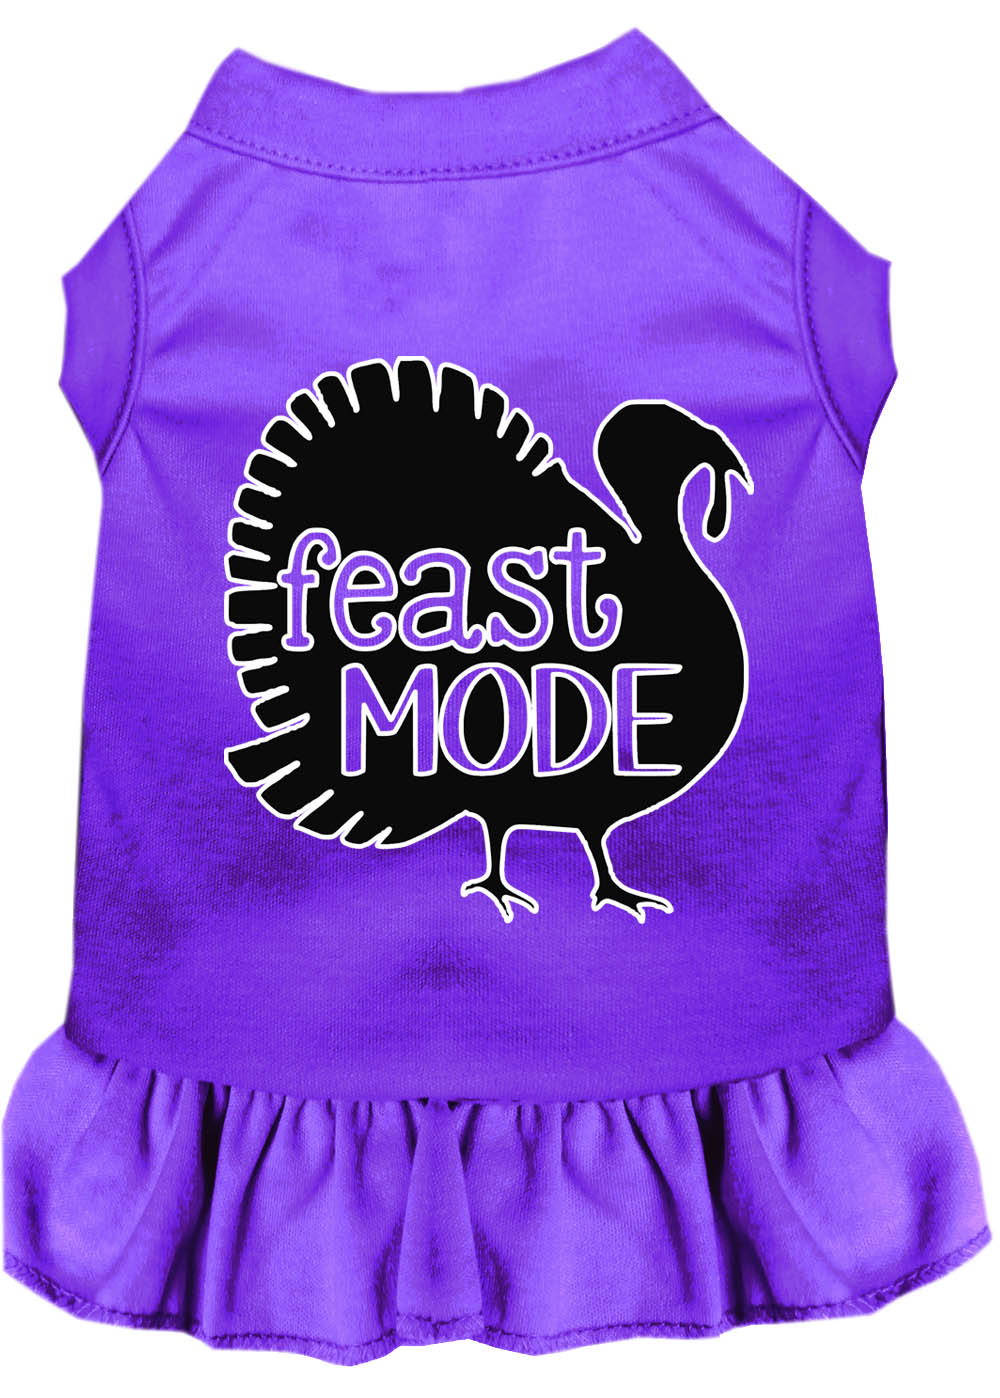 Feast Mode Screen Print Dog Dress Purple Sm